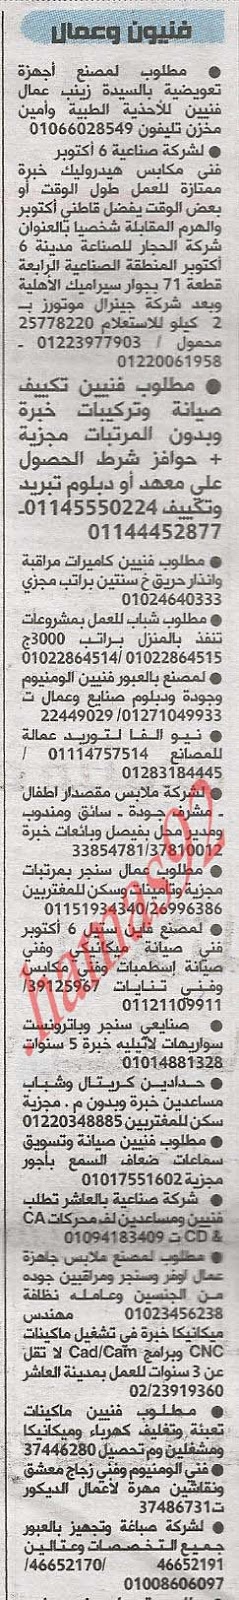 وظائف خالية من جريدة بانوراما الاهرام اليوم الاثنين 21/1/2013 %D8%A8%D8%A7%D9%86%D9%88%D8%B1%D8%A7%D9%85%D8%A7+6